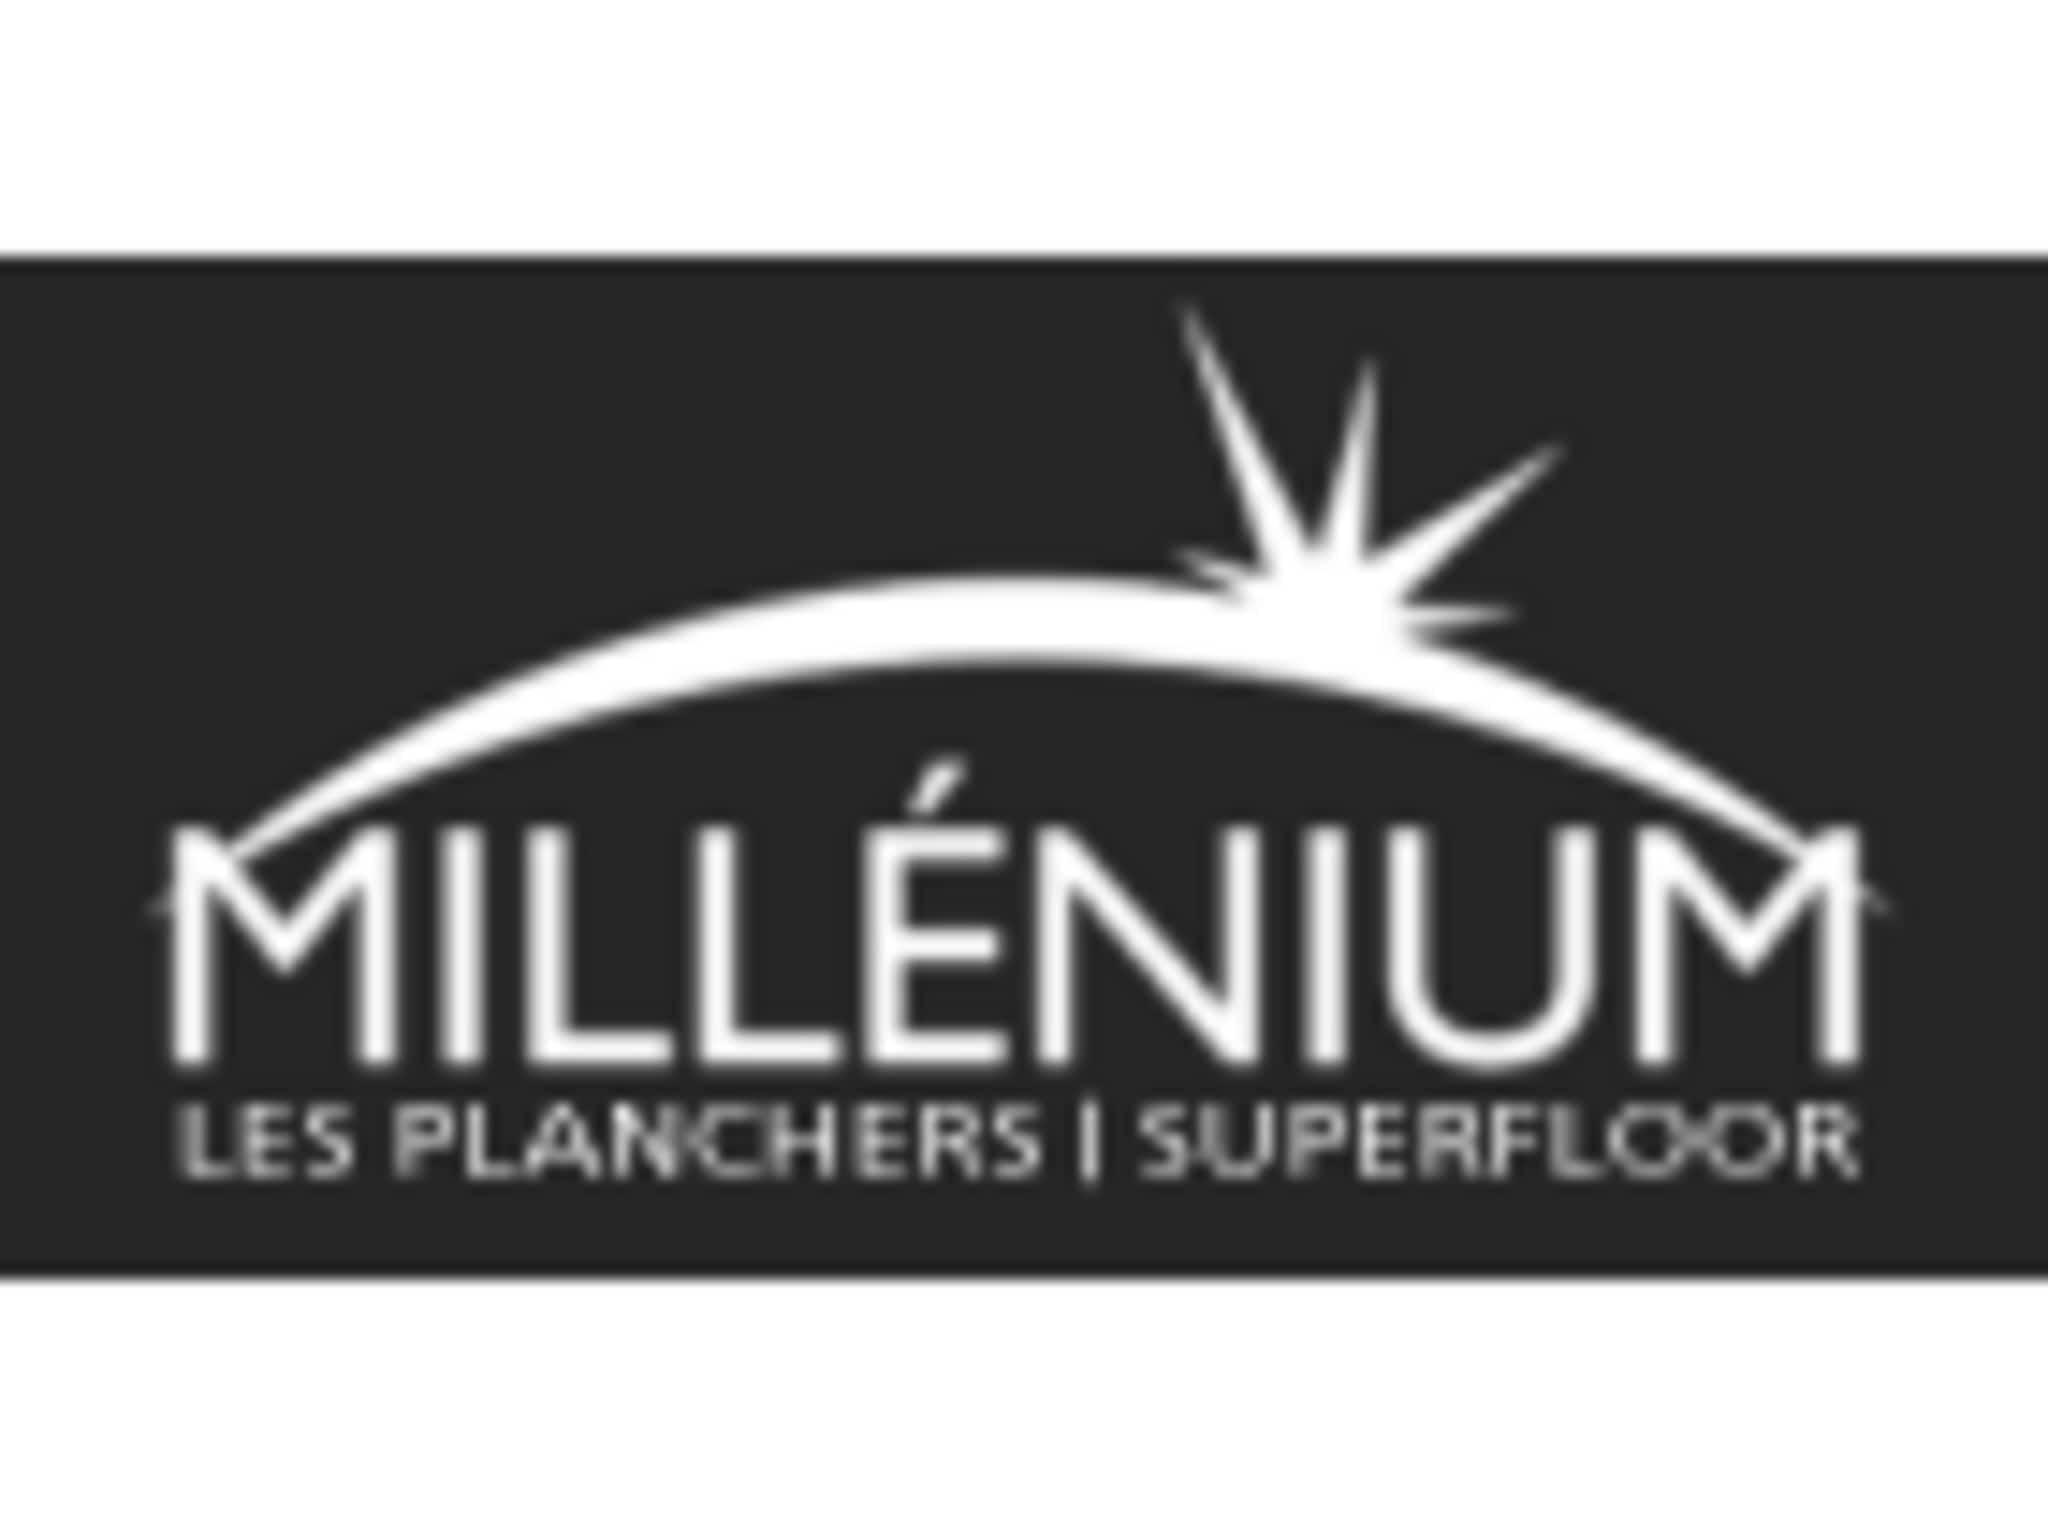 photo Les Planchers Millenium Super Floor